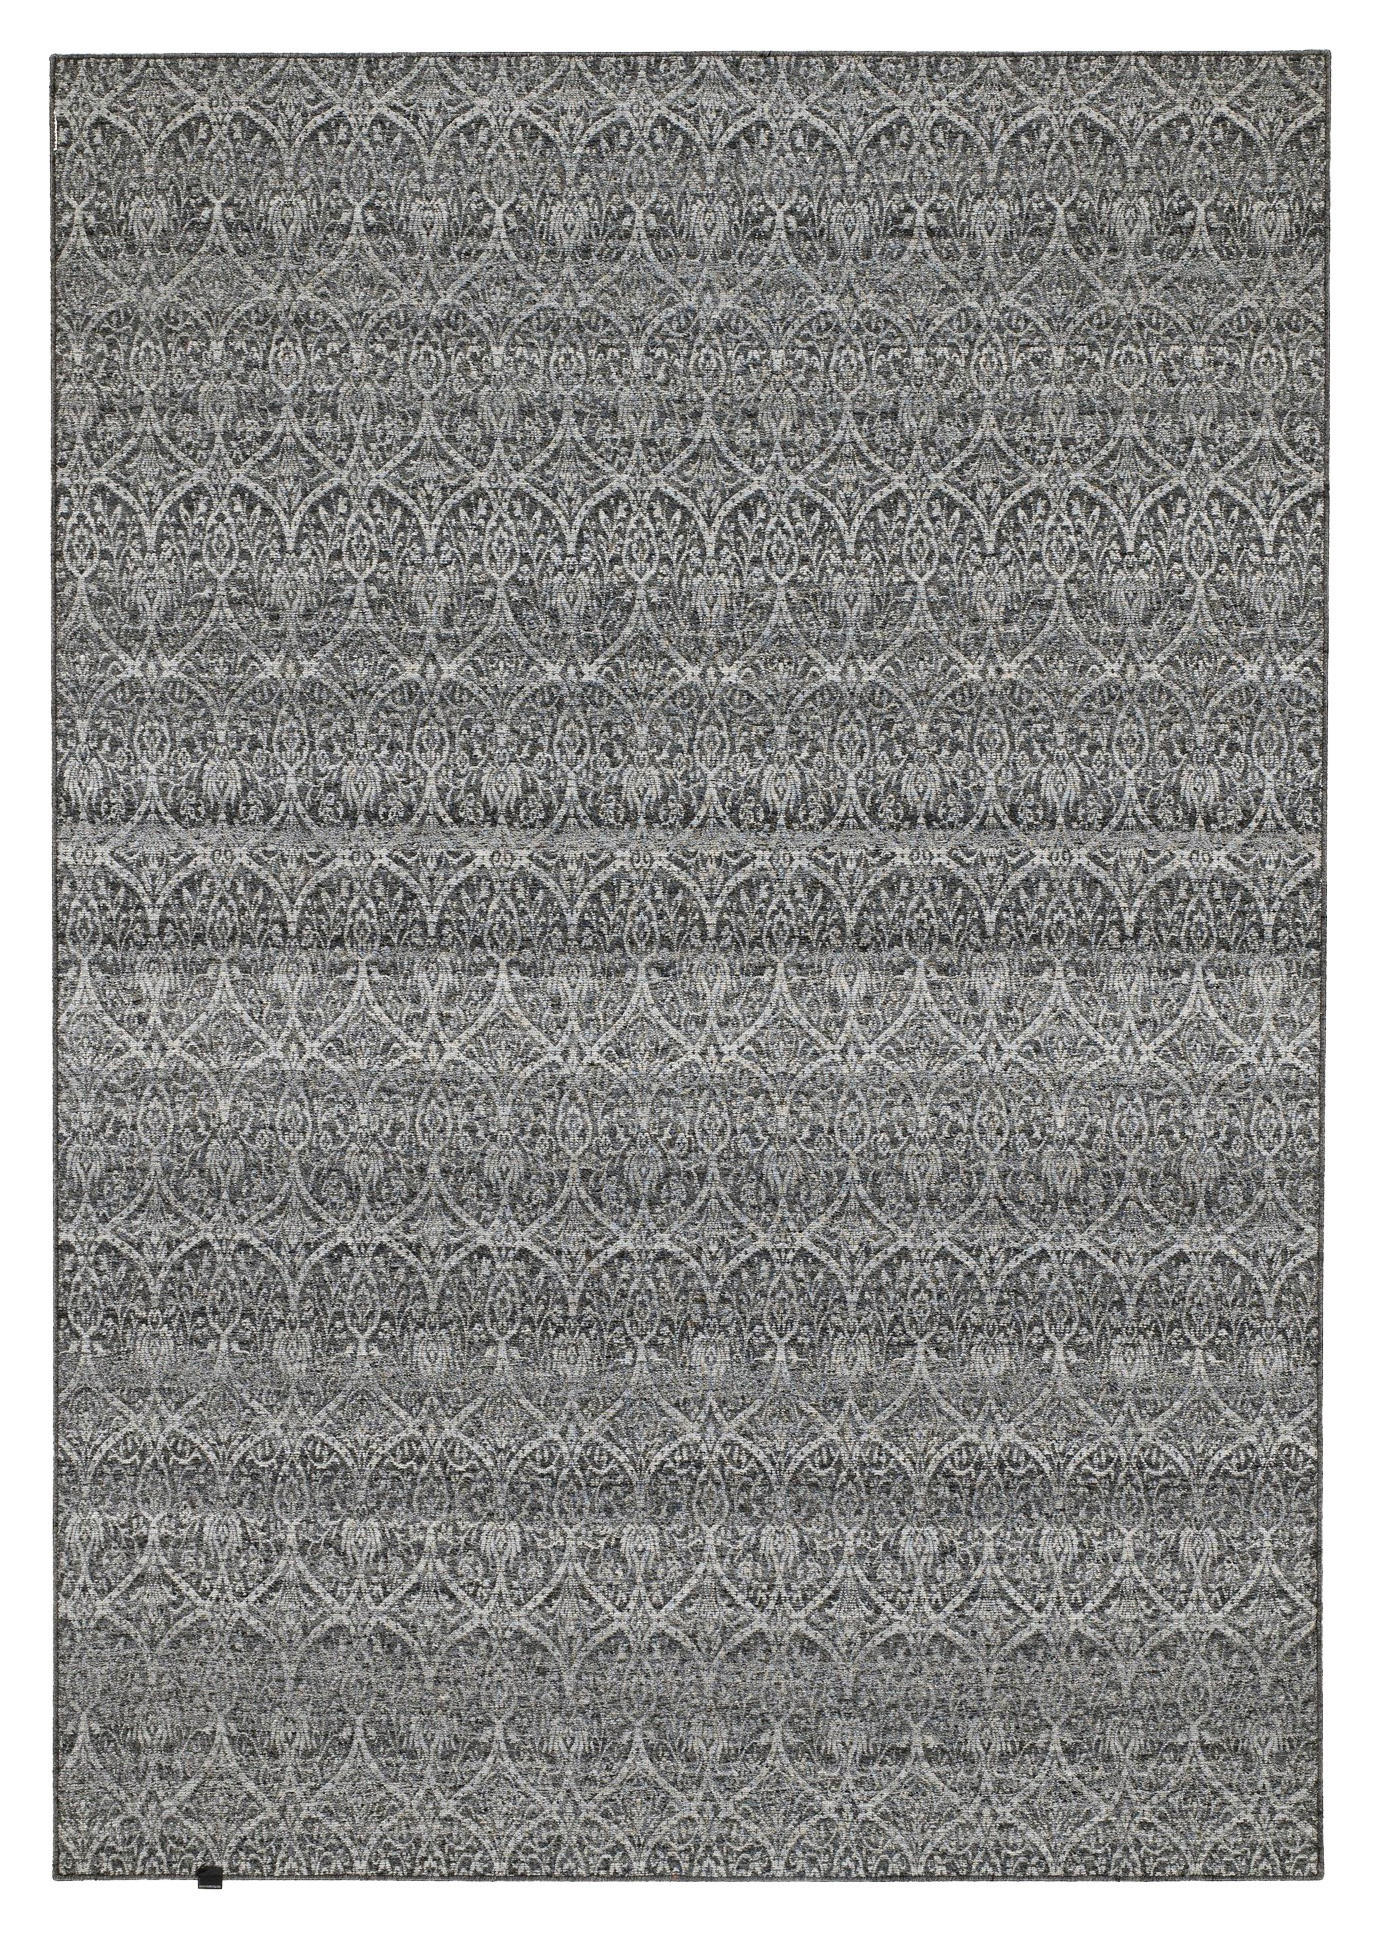 ORIENTTEPPICH  Malibu  - Dunkelgrau, KONVENTIONELL, Textil (70/140cm) - Musterring